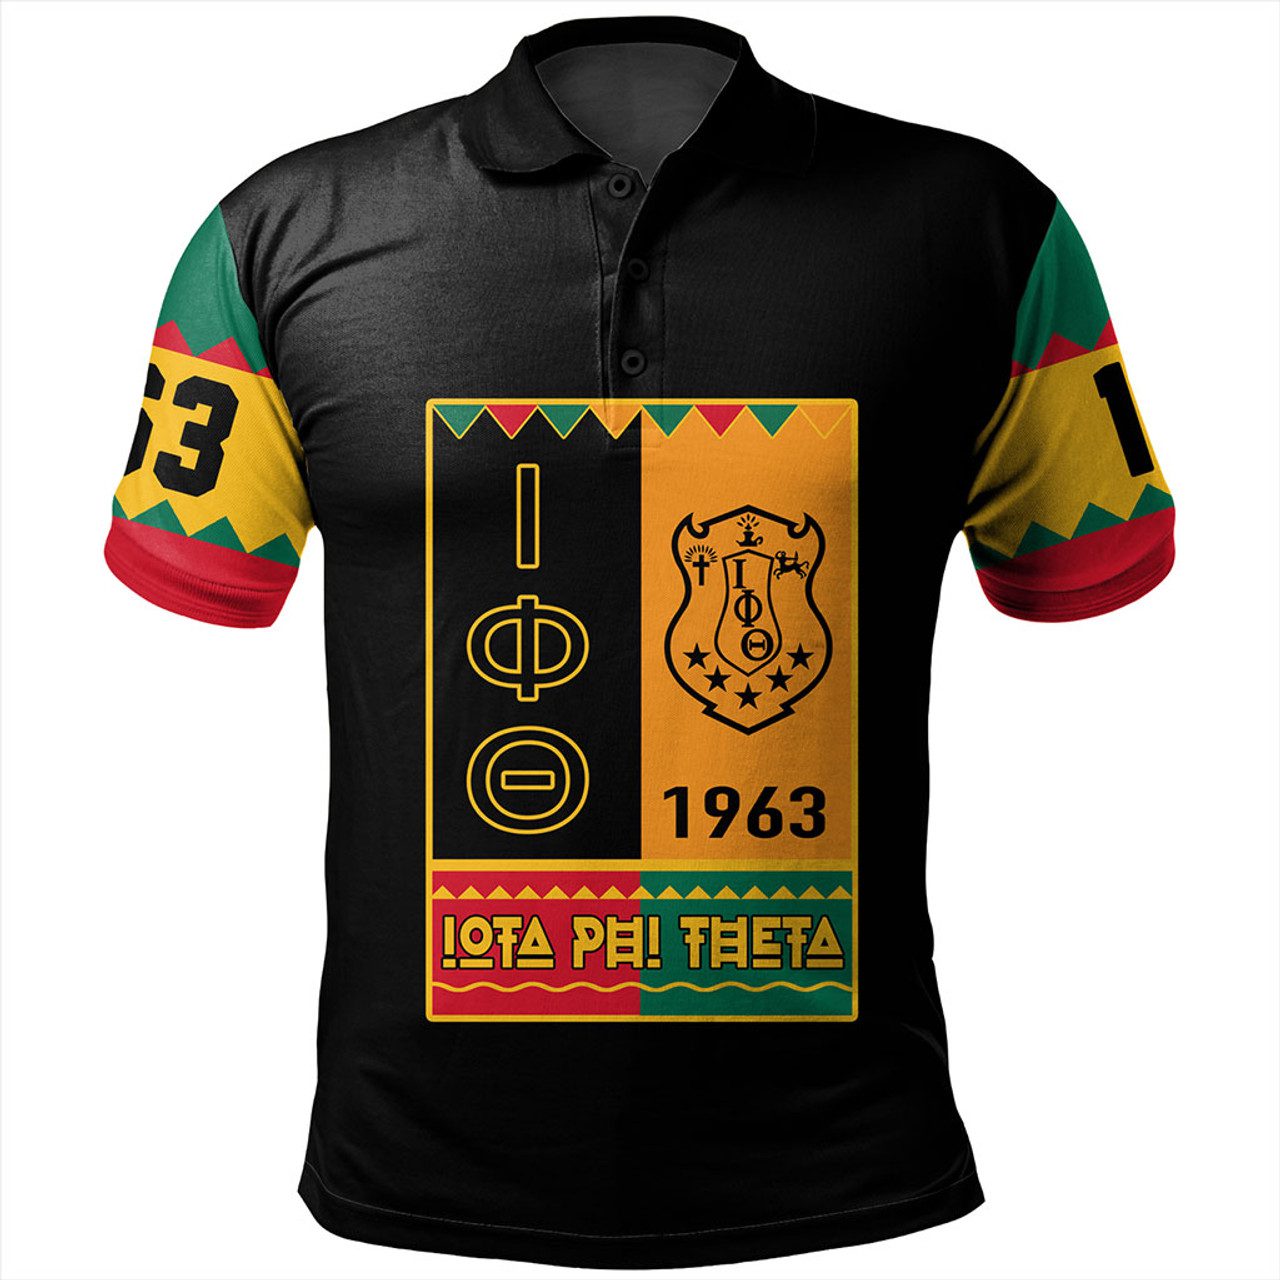 Iota Phi Theta Polo Shirt Black History Month